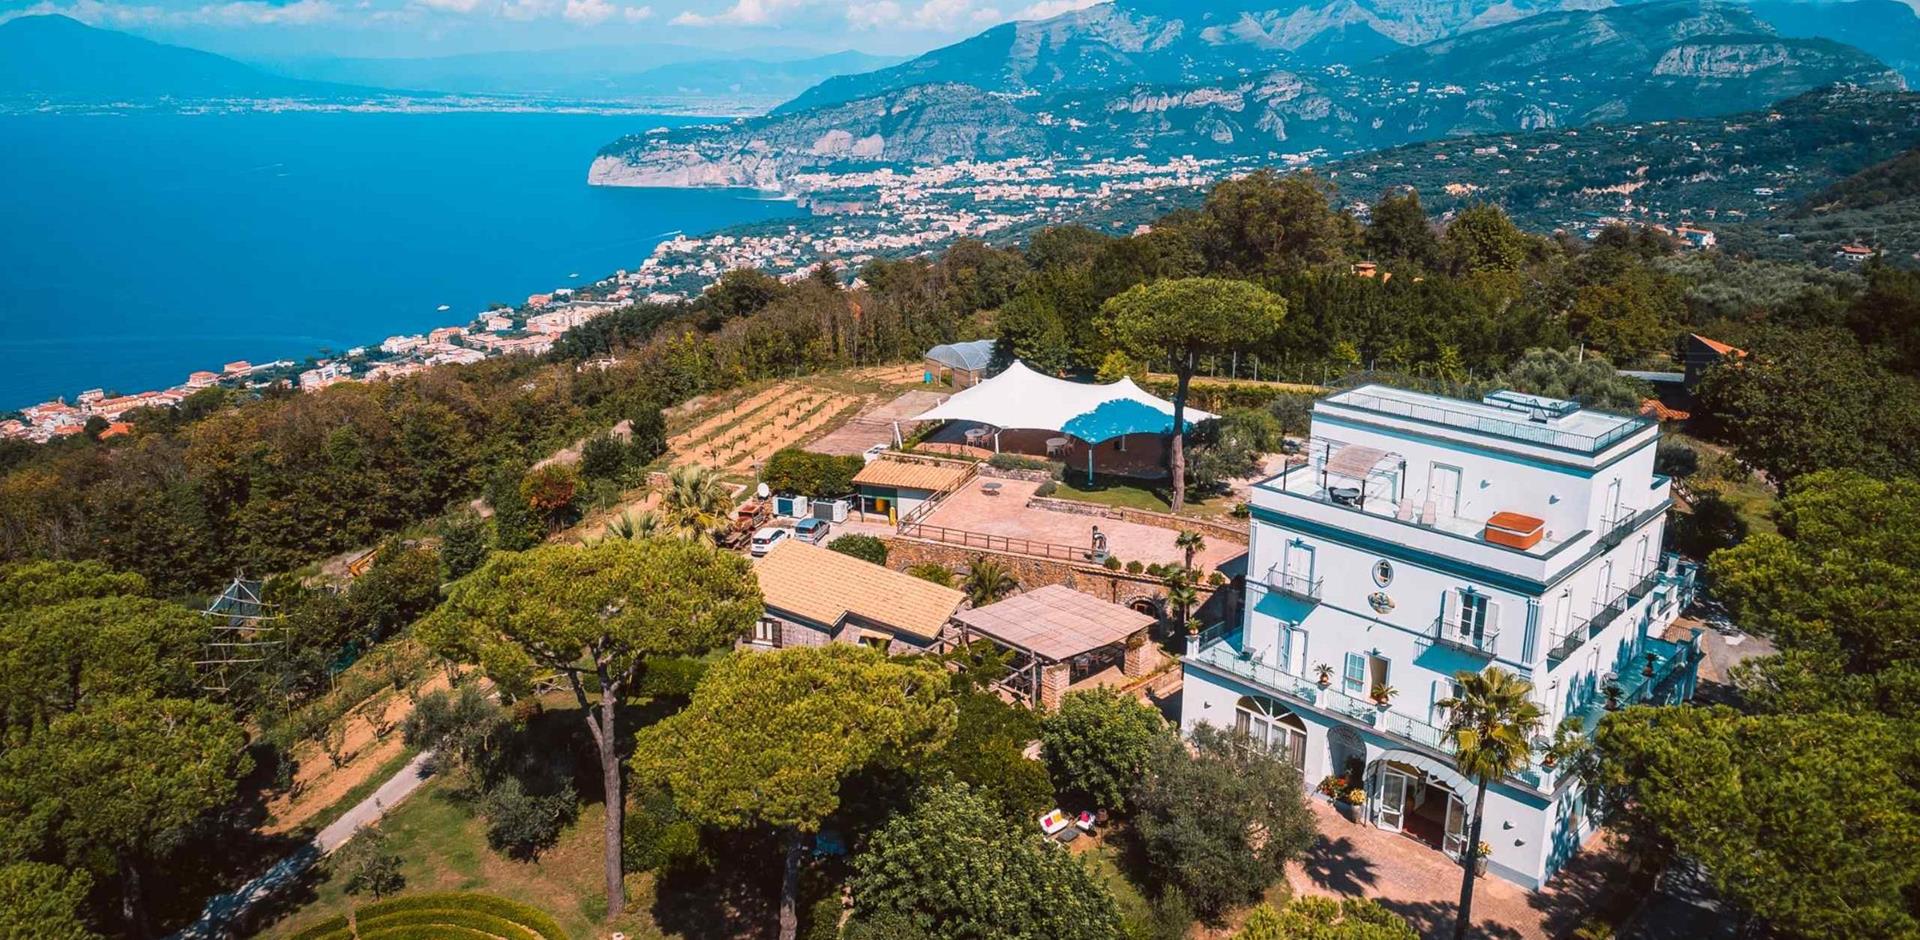 Aerial view, Podere due Golfi, Amalfi Coast, Italy